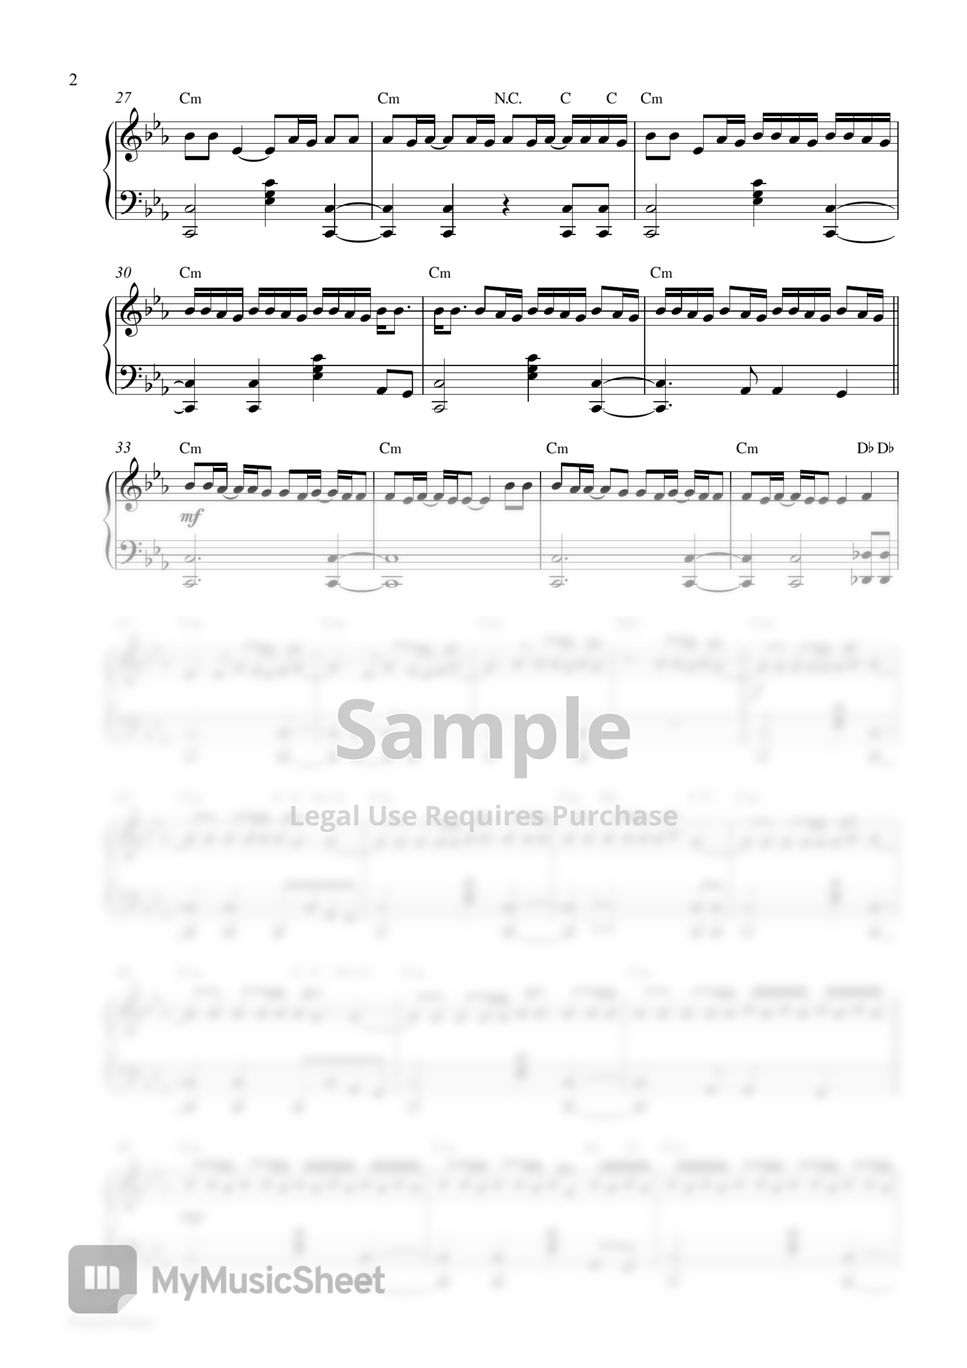 Agust D (SUGA) - Haegeum (Piano Sheet) by Pianella Piano